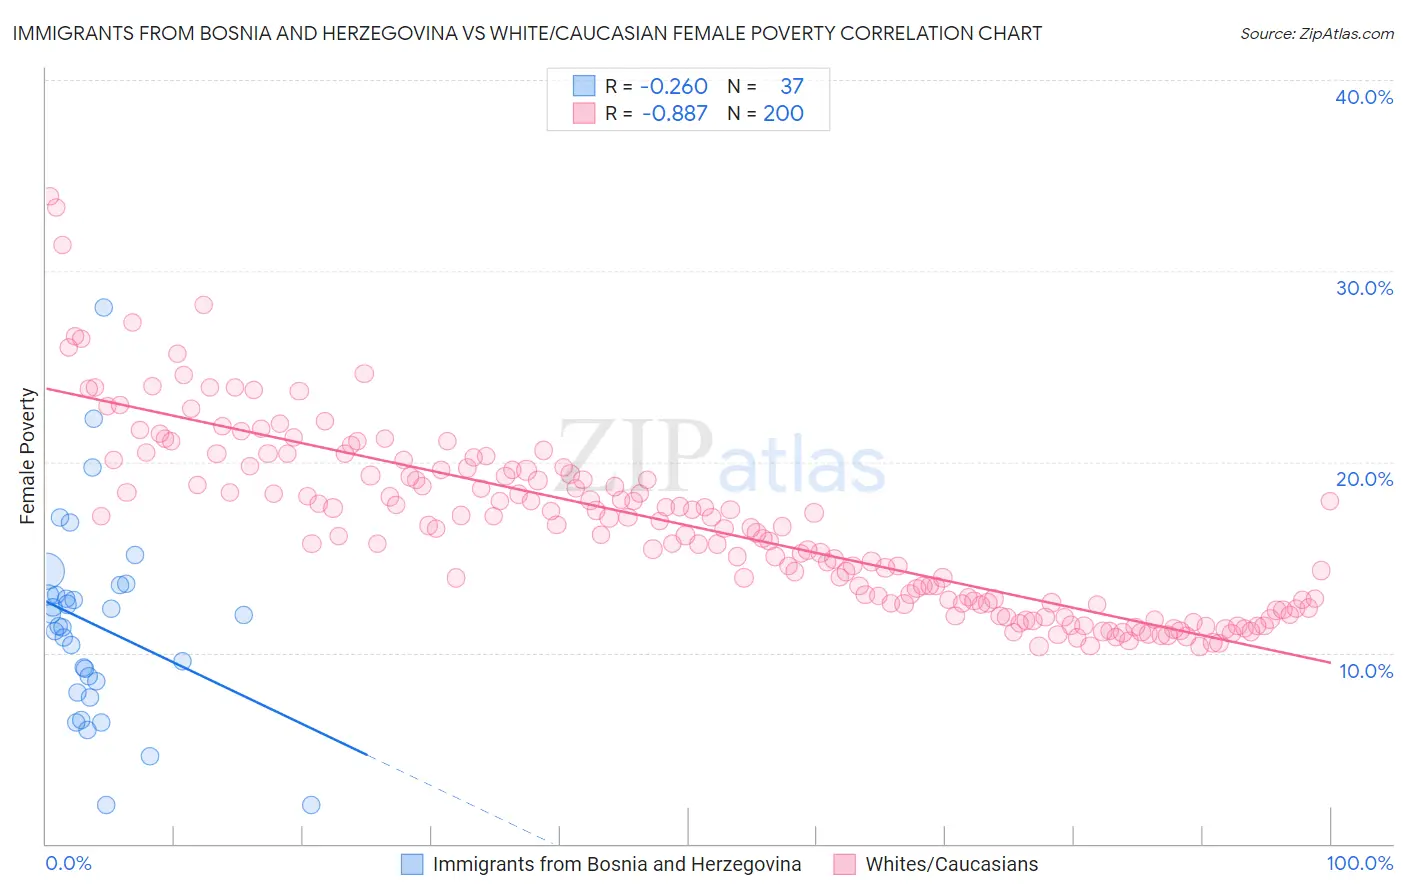 Immigrants from Bosnia and Herzegovina vs White/Caucasian Female Poverty